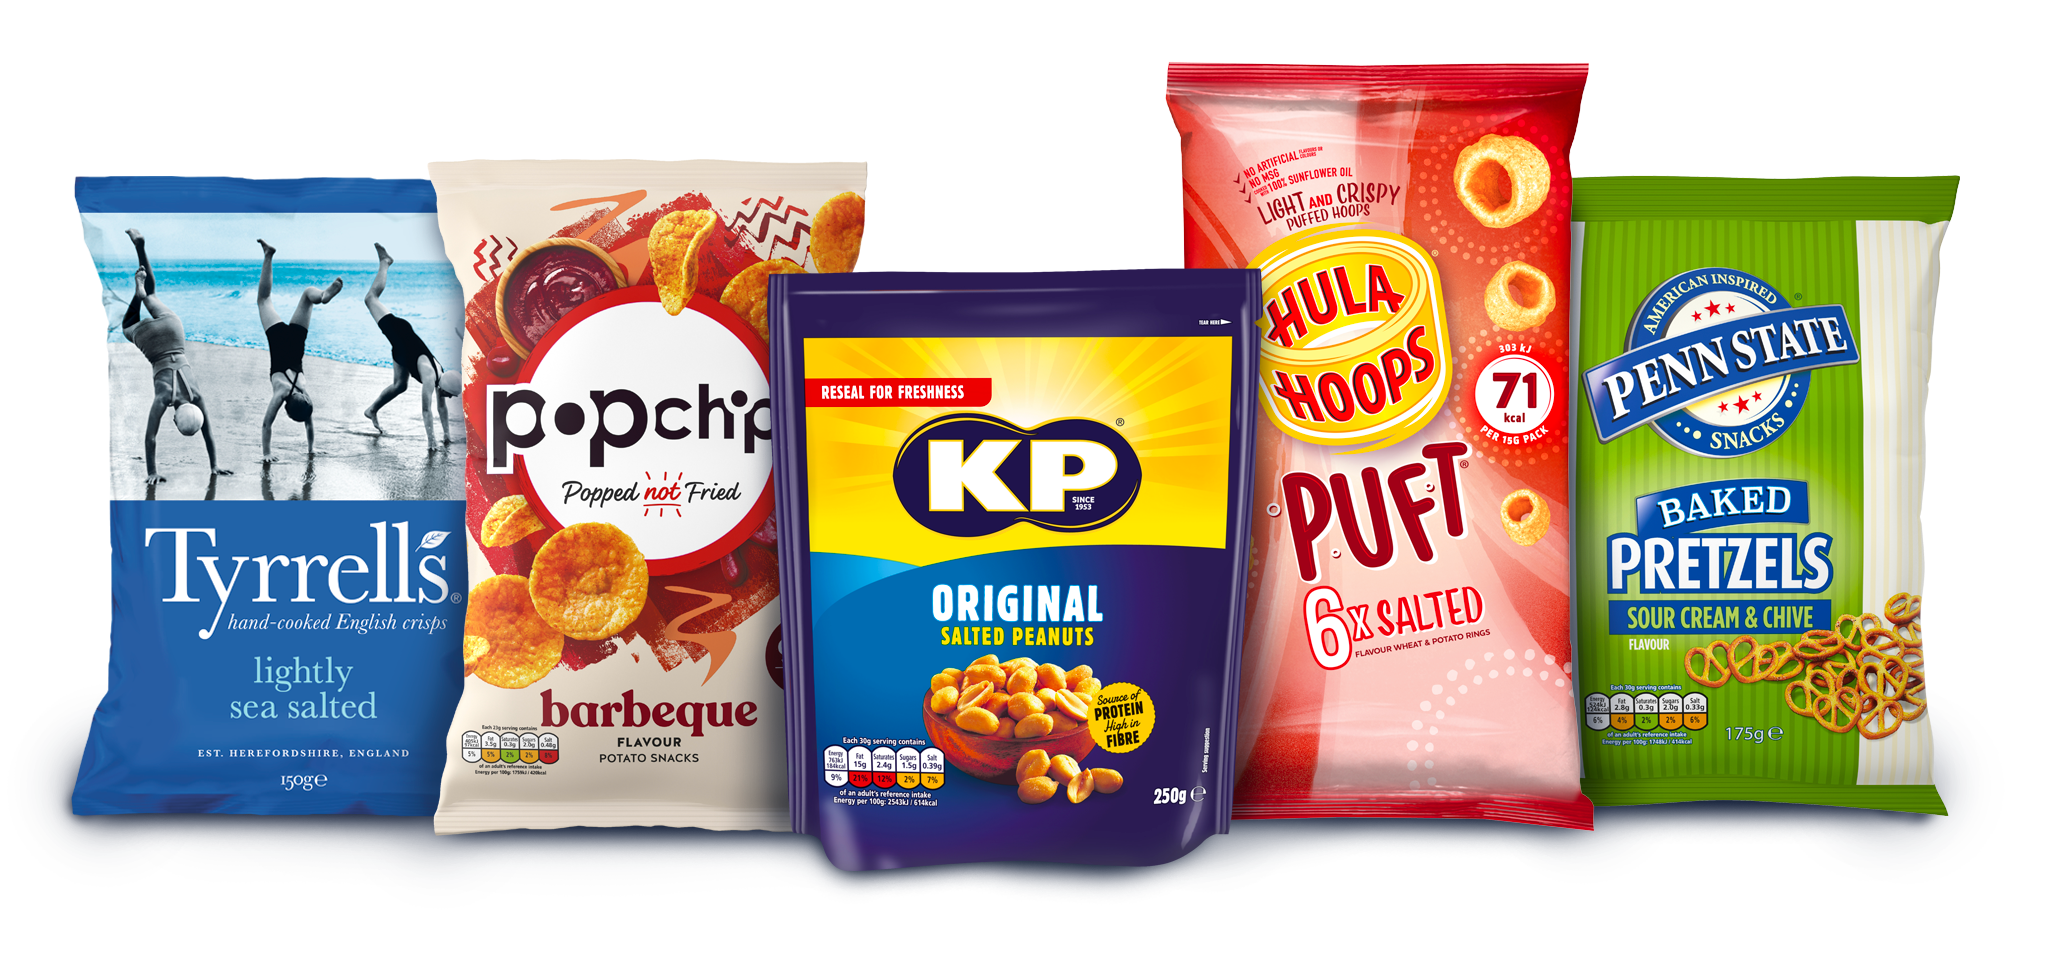 KP Snacks announces HFSS brand reformulation strategy